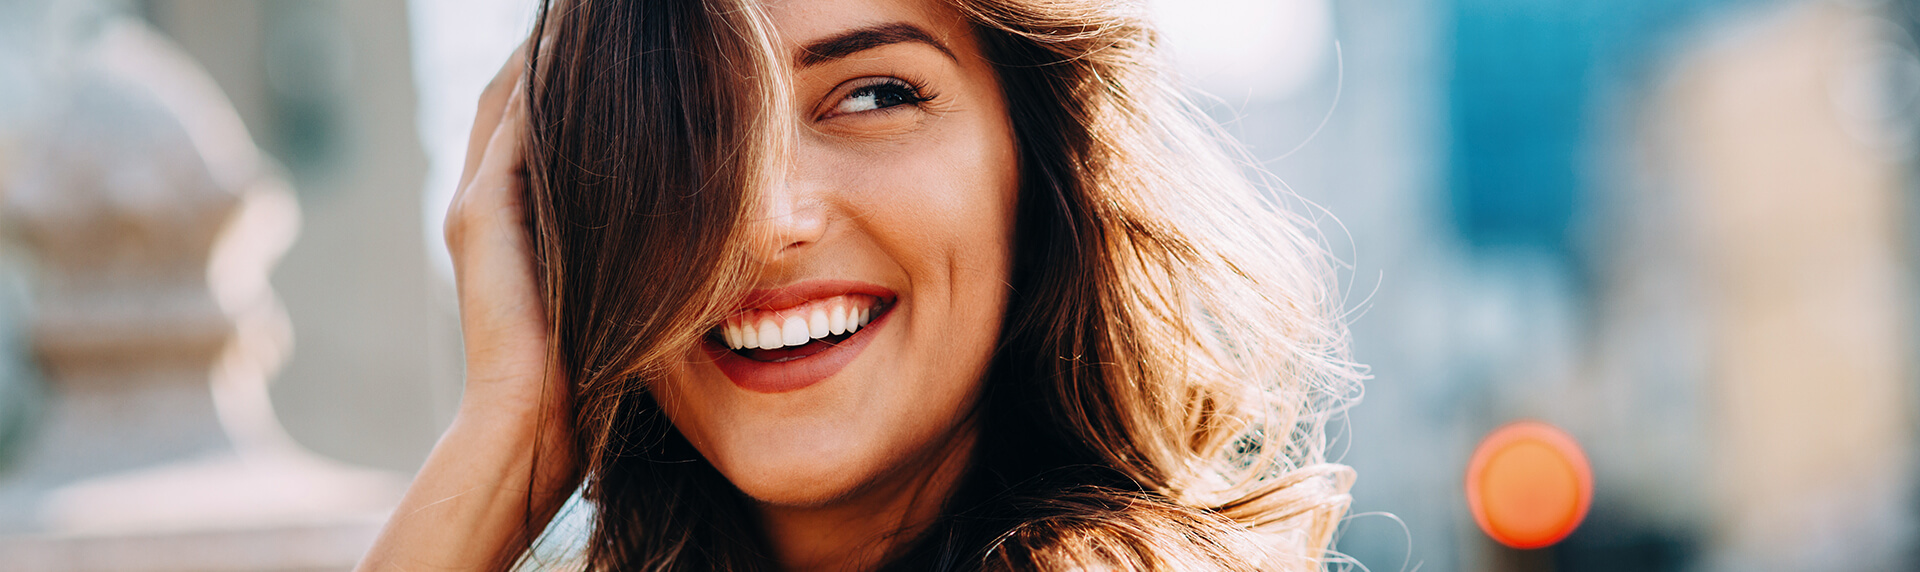 woman smiling with straight, white teeth in jonesboro